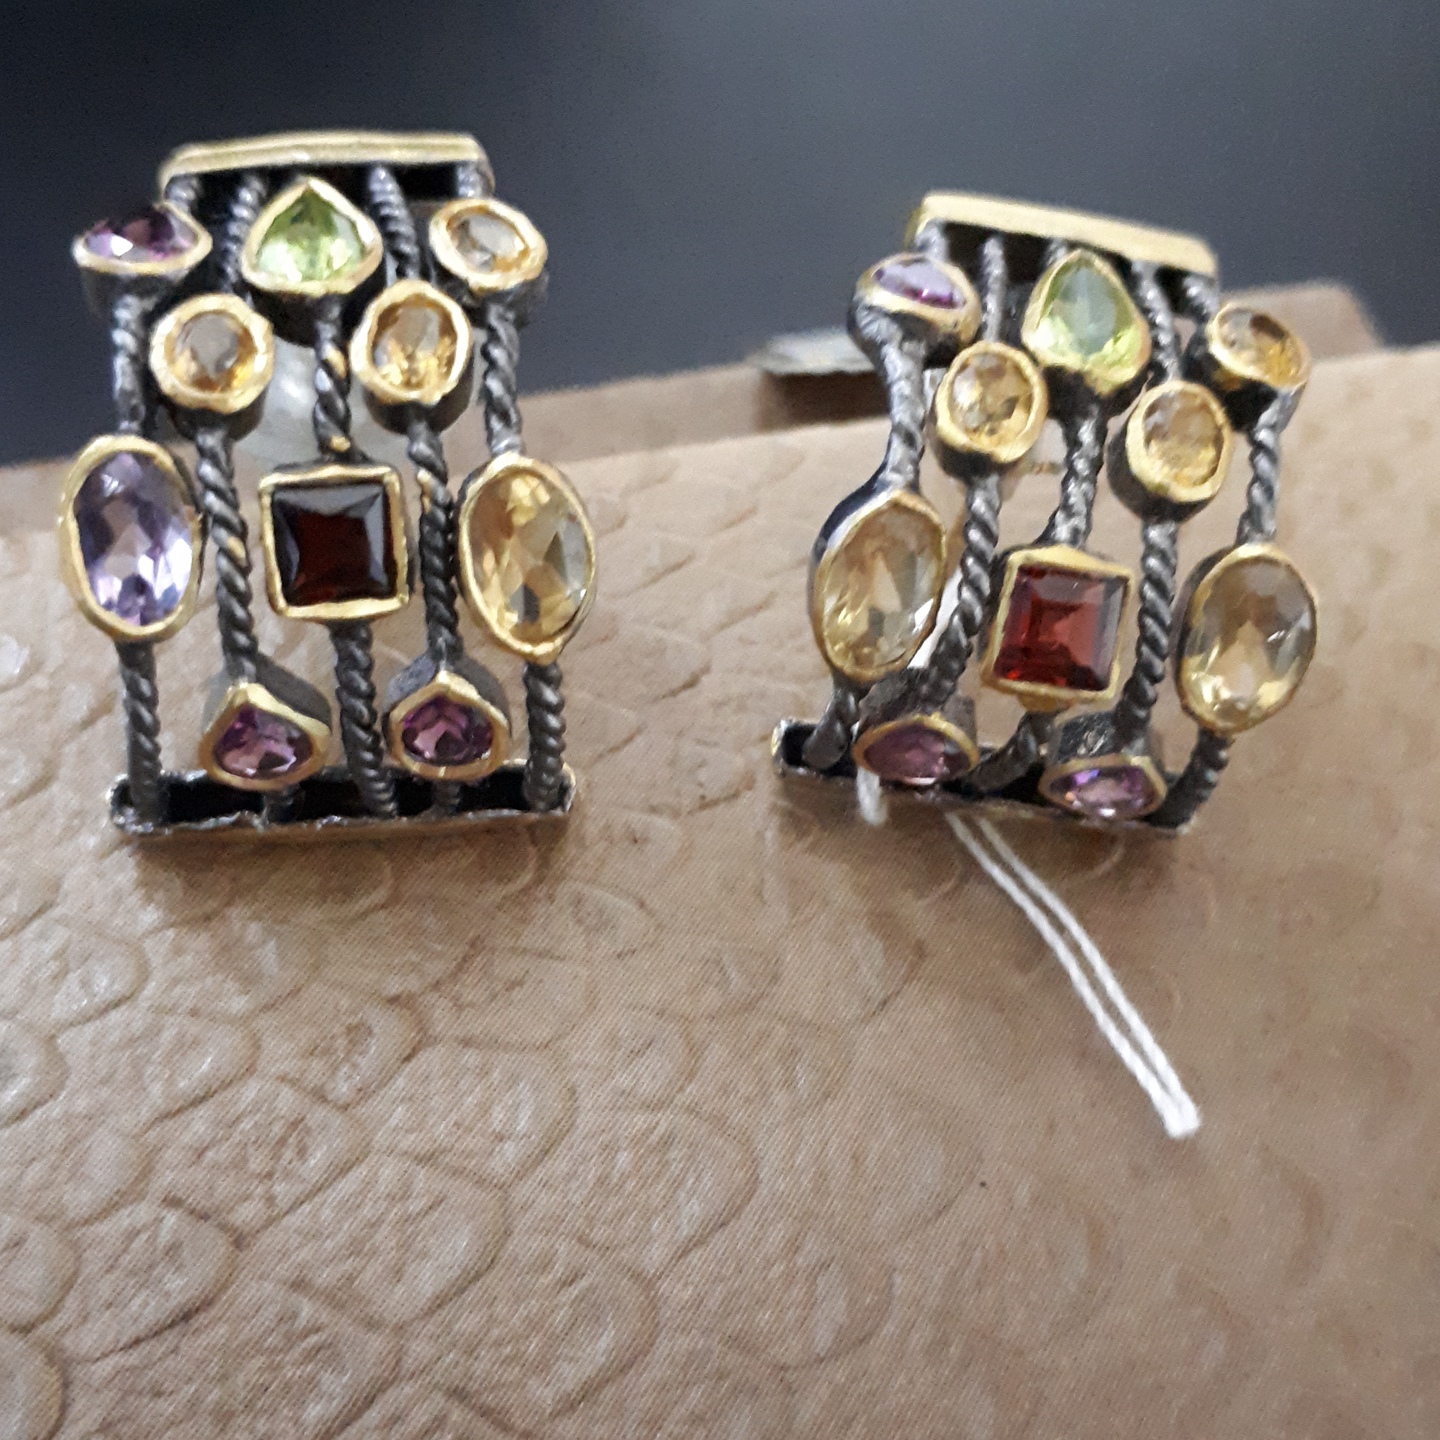 Earrings with Multi colored semi precious stones